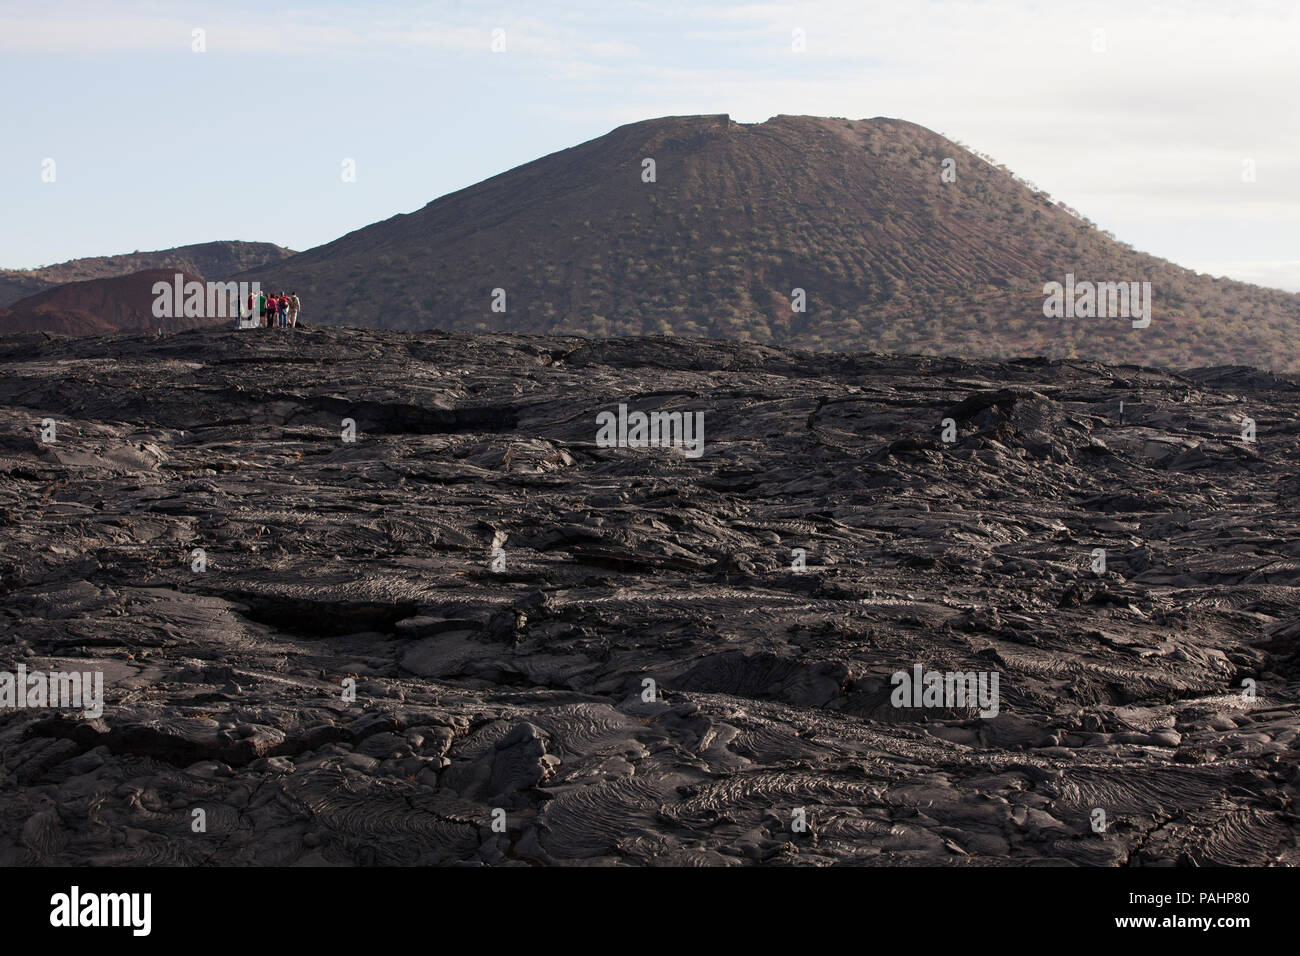 Vulkanische Landschaft von Lava, Insel Santiago, Galapagos Inseln Stockfoto